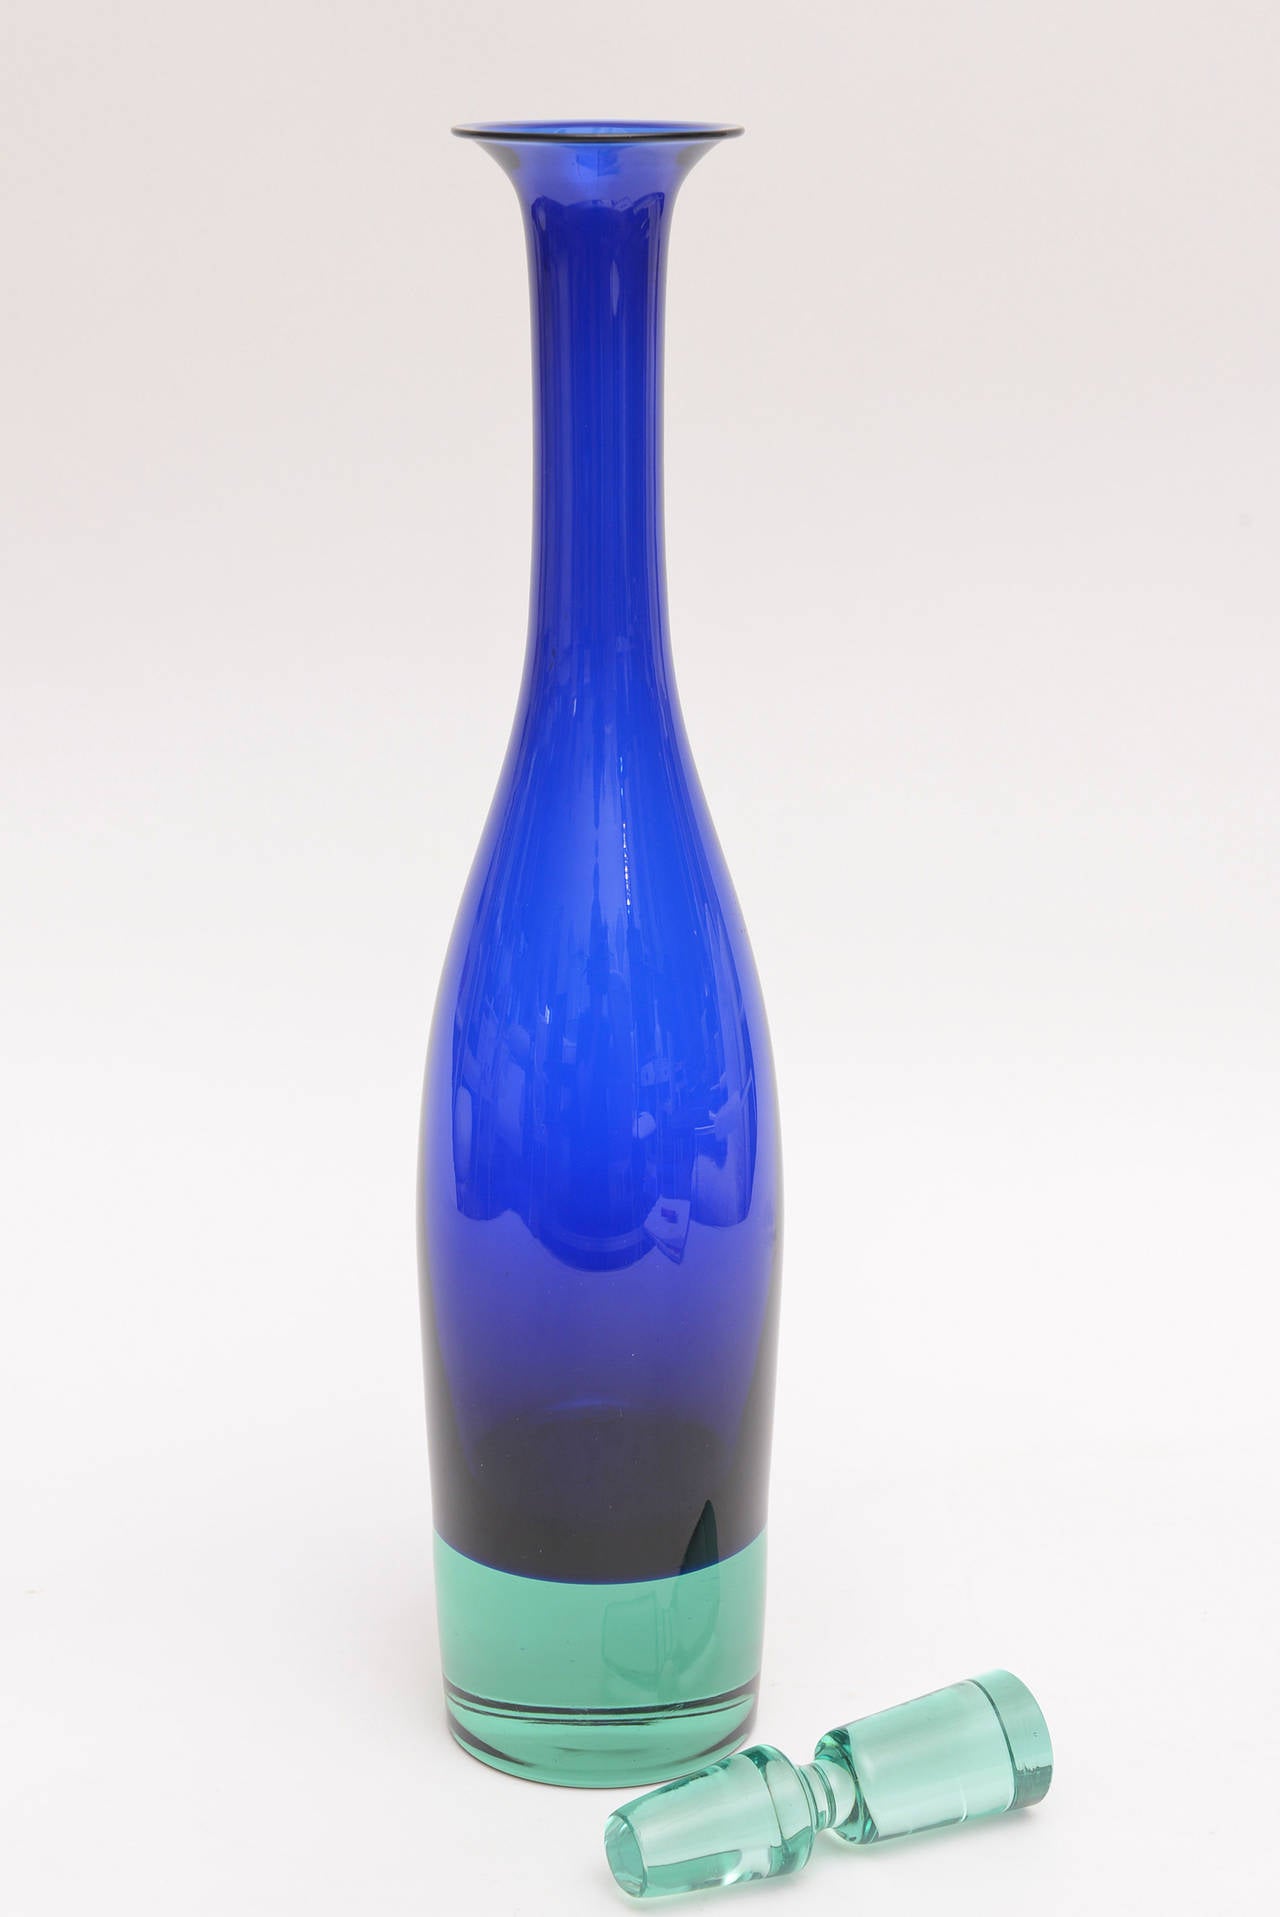 Modern Anje Kjaer for Holmegaard Sommerso Glass Bottle/ Decanter